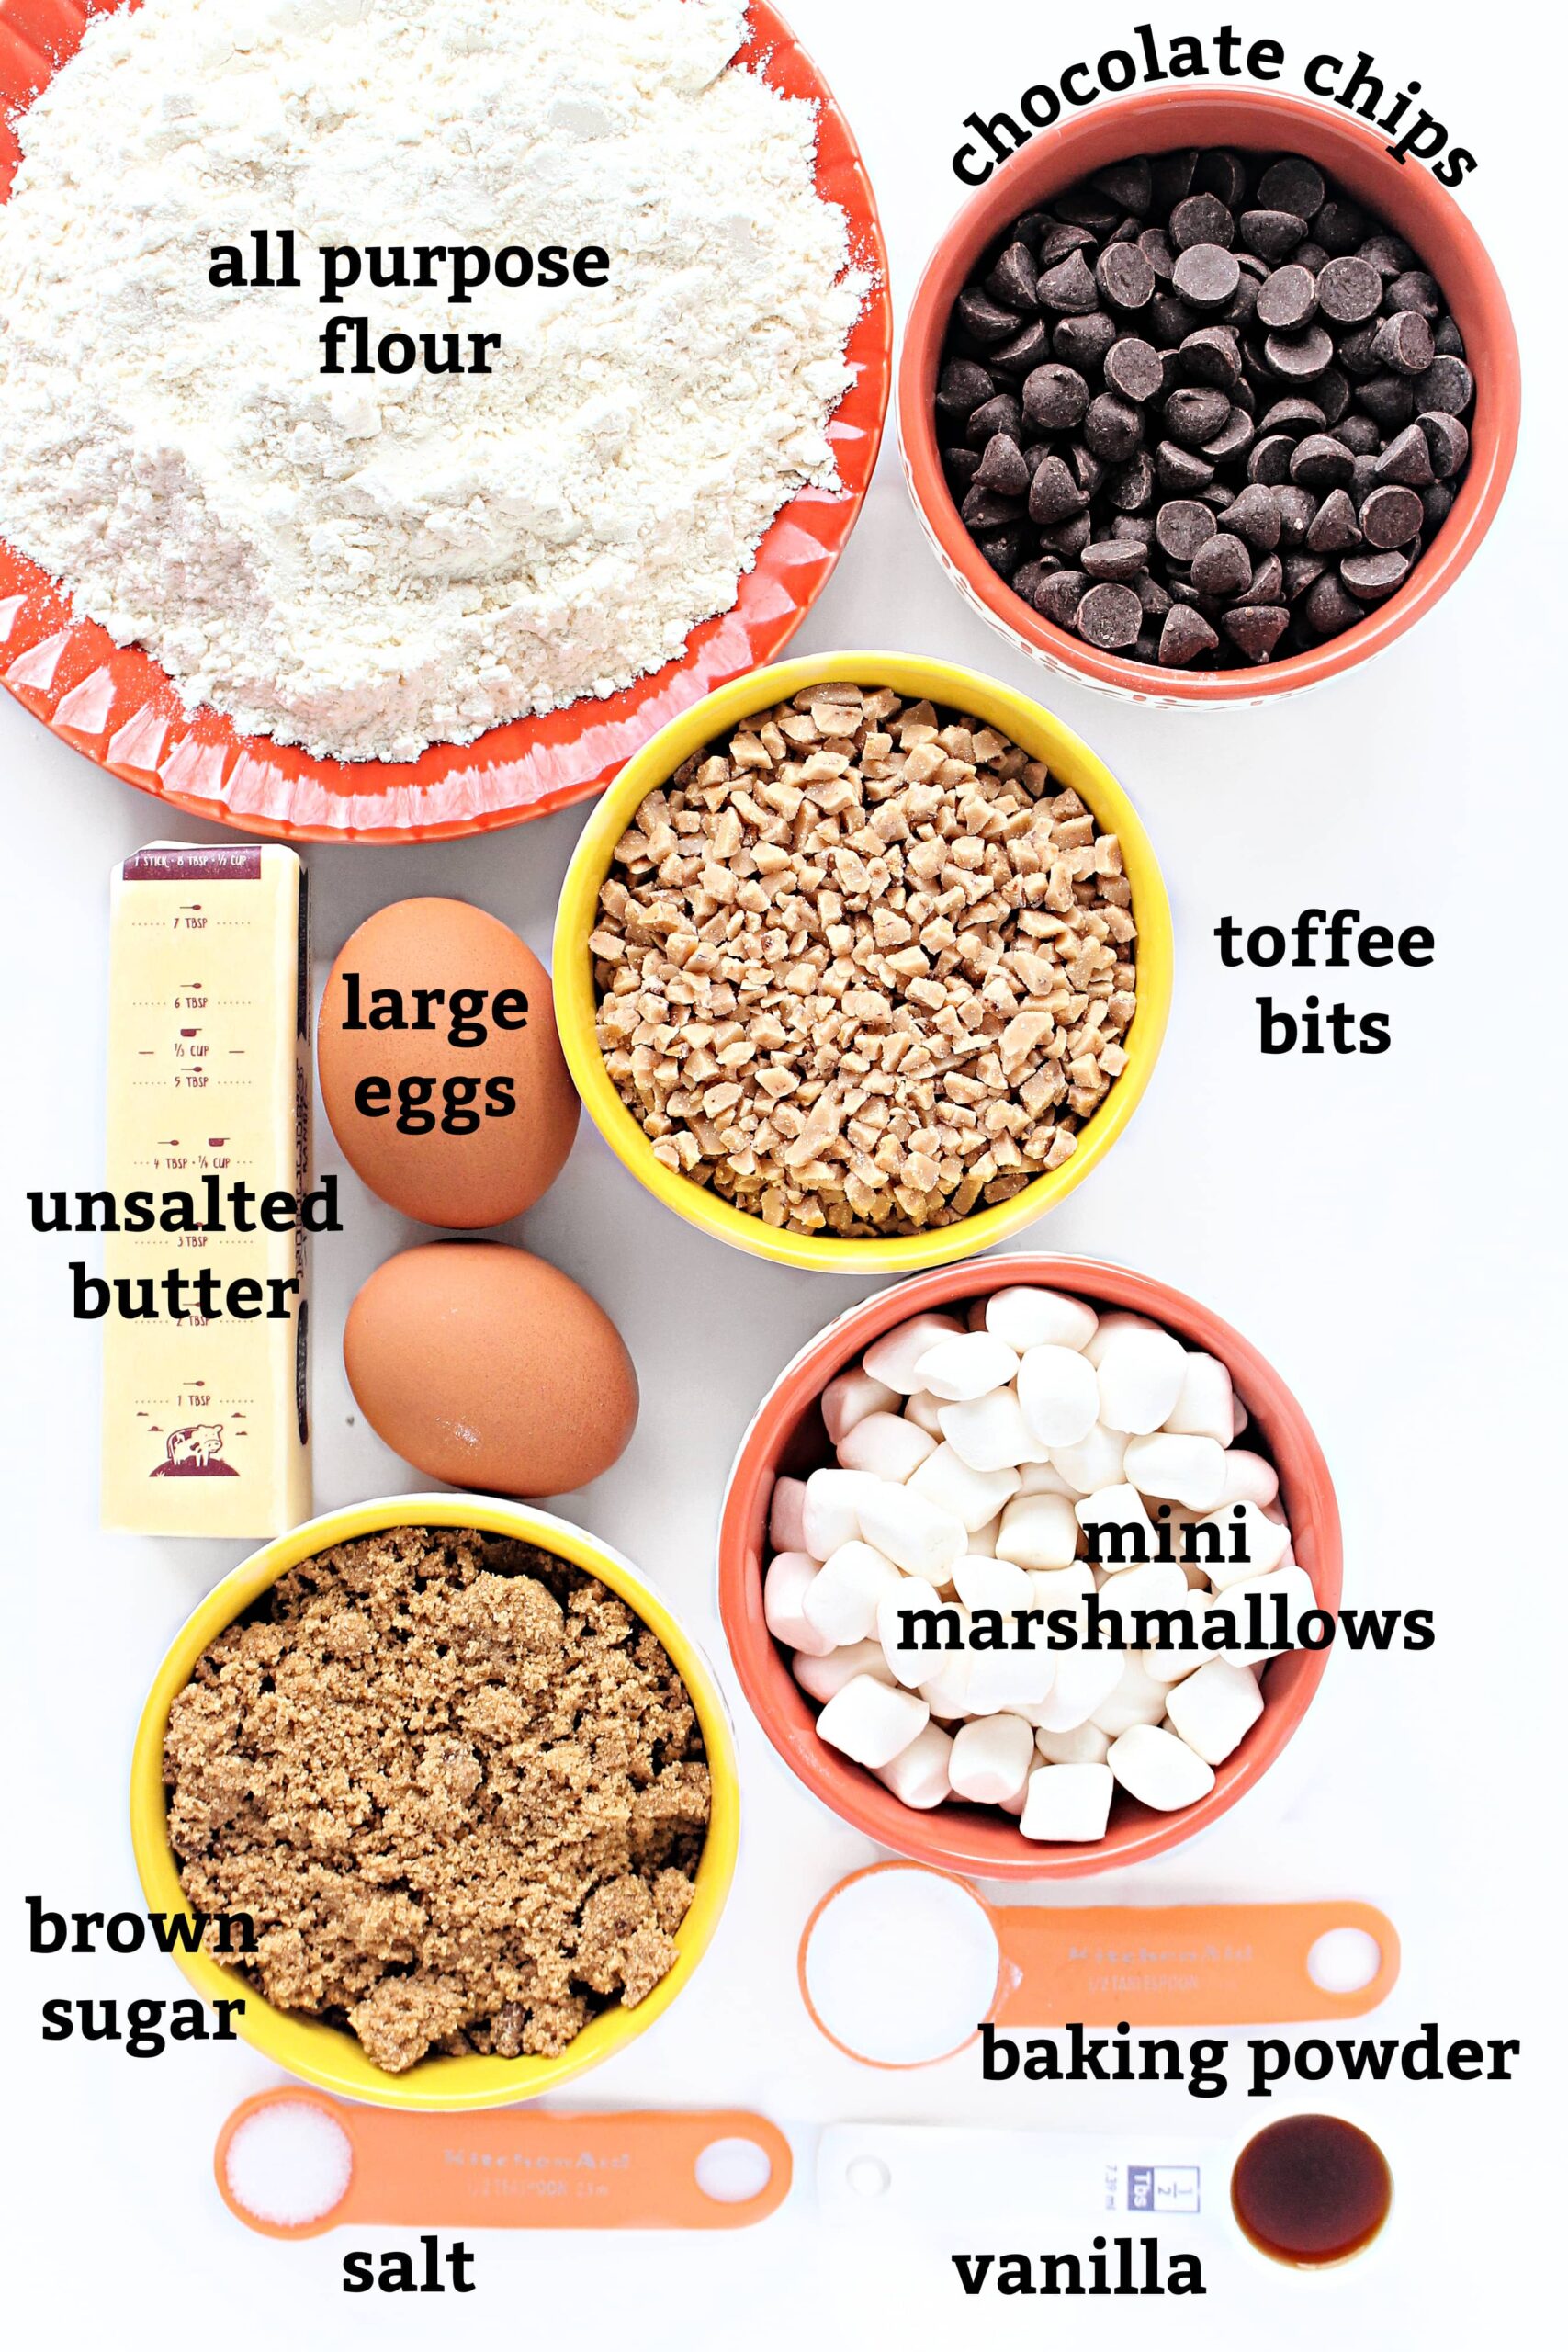 Ingredients: flour, butter, eggs, chocolate chips, toffee bits, mini marshmallows, brown sugar, salt, baking powder, vanilla.